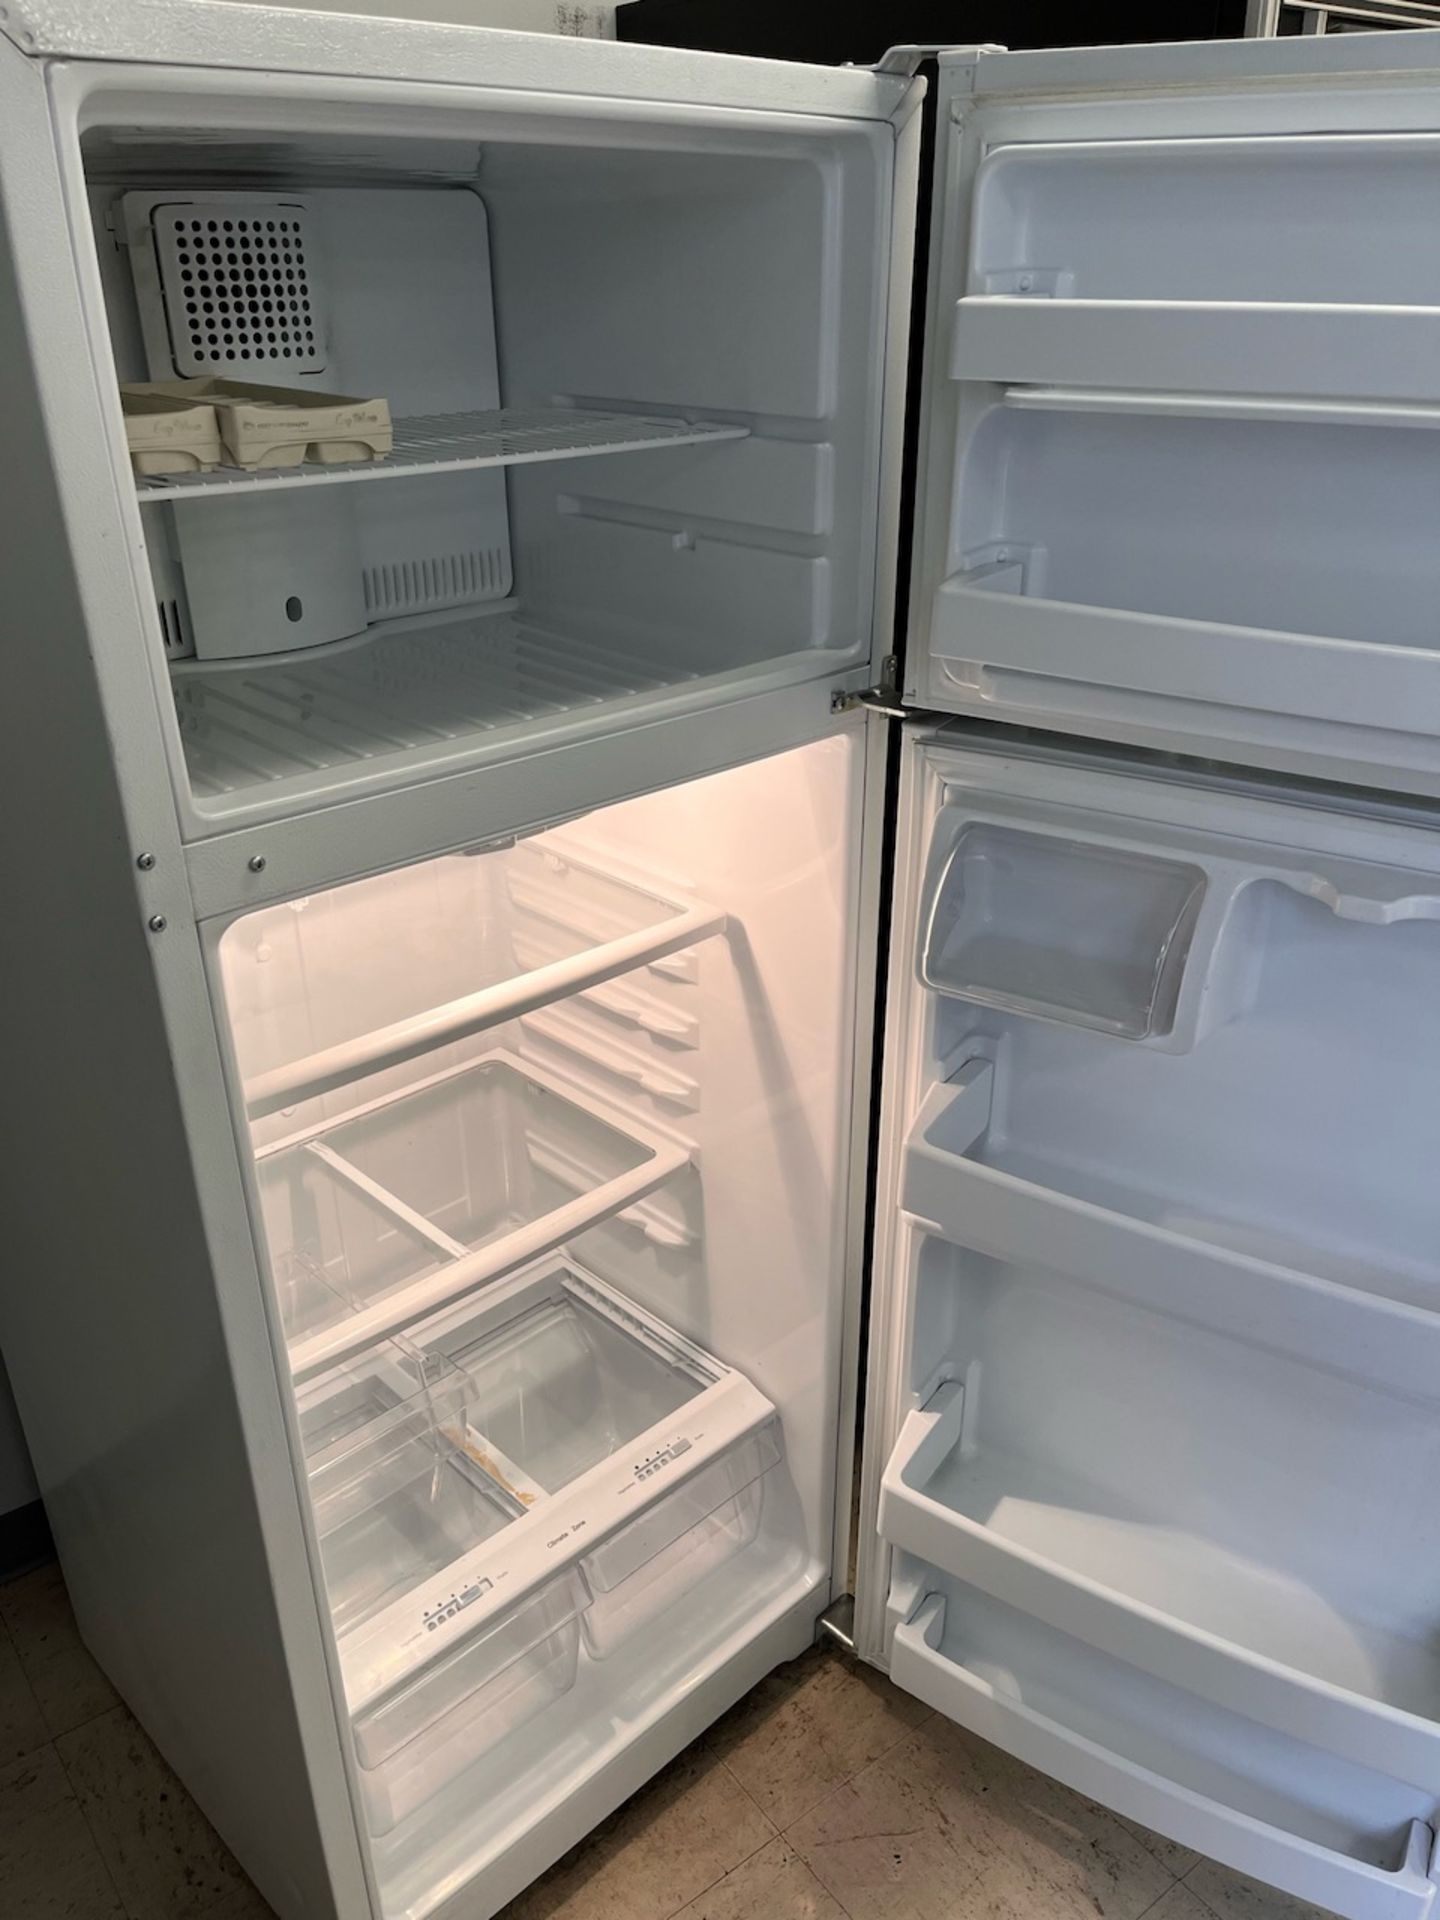 General Electric fridge - Image 2 of 2